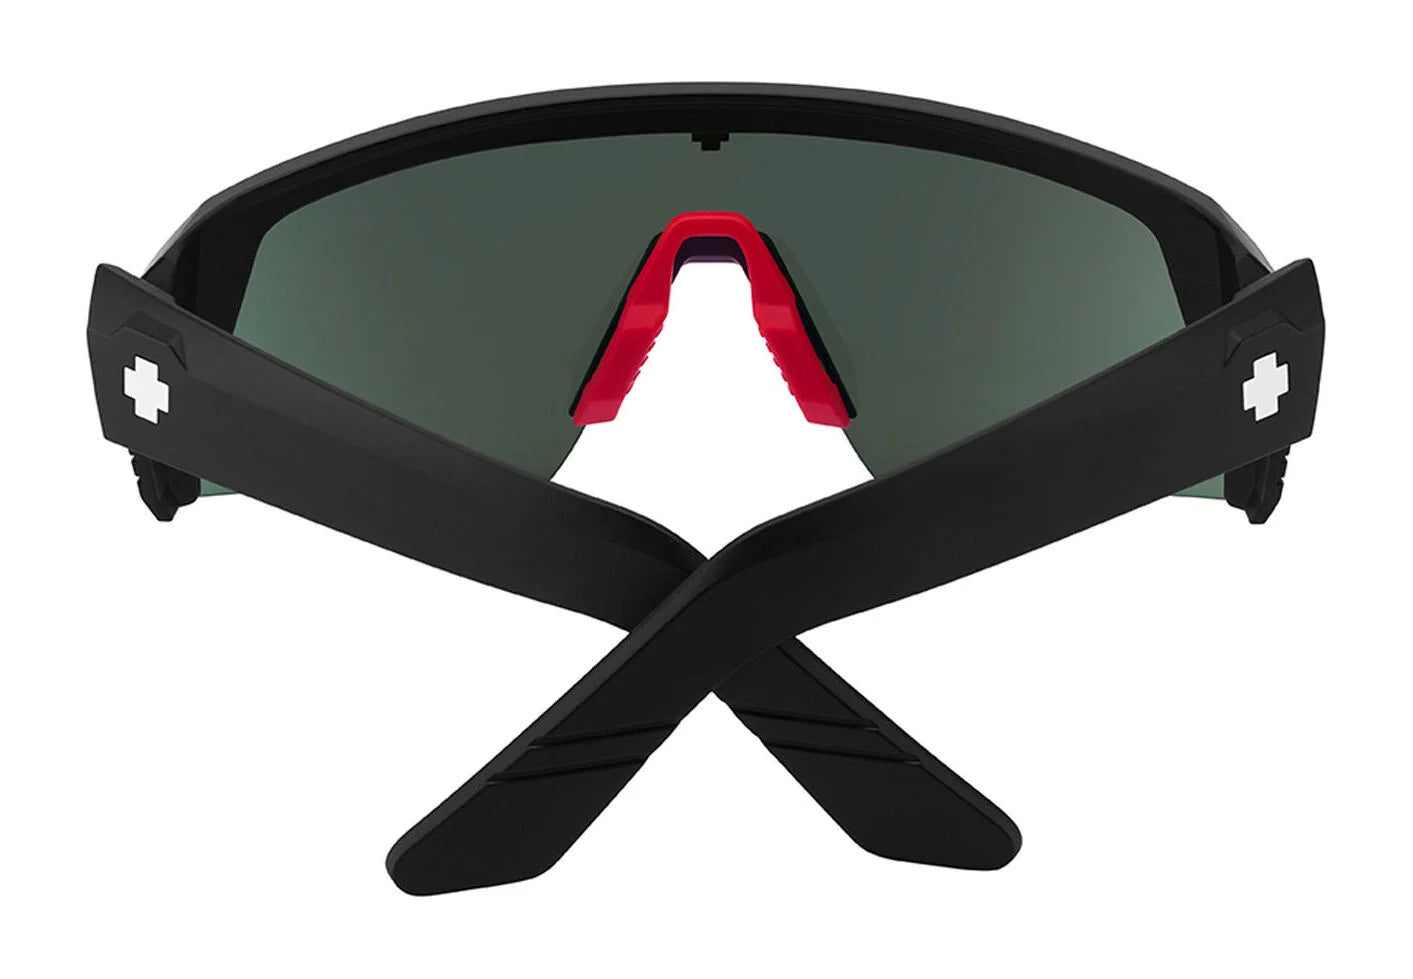 SPY MONOLITH Speed Sunglasses | Size 142